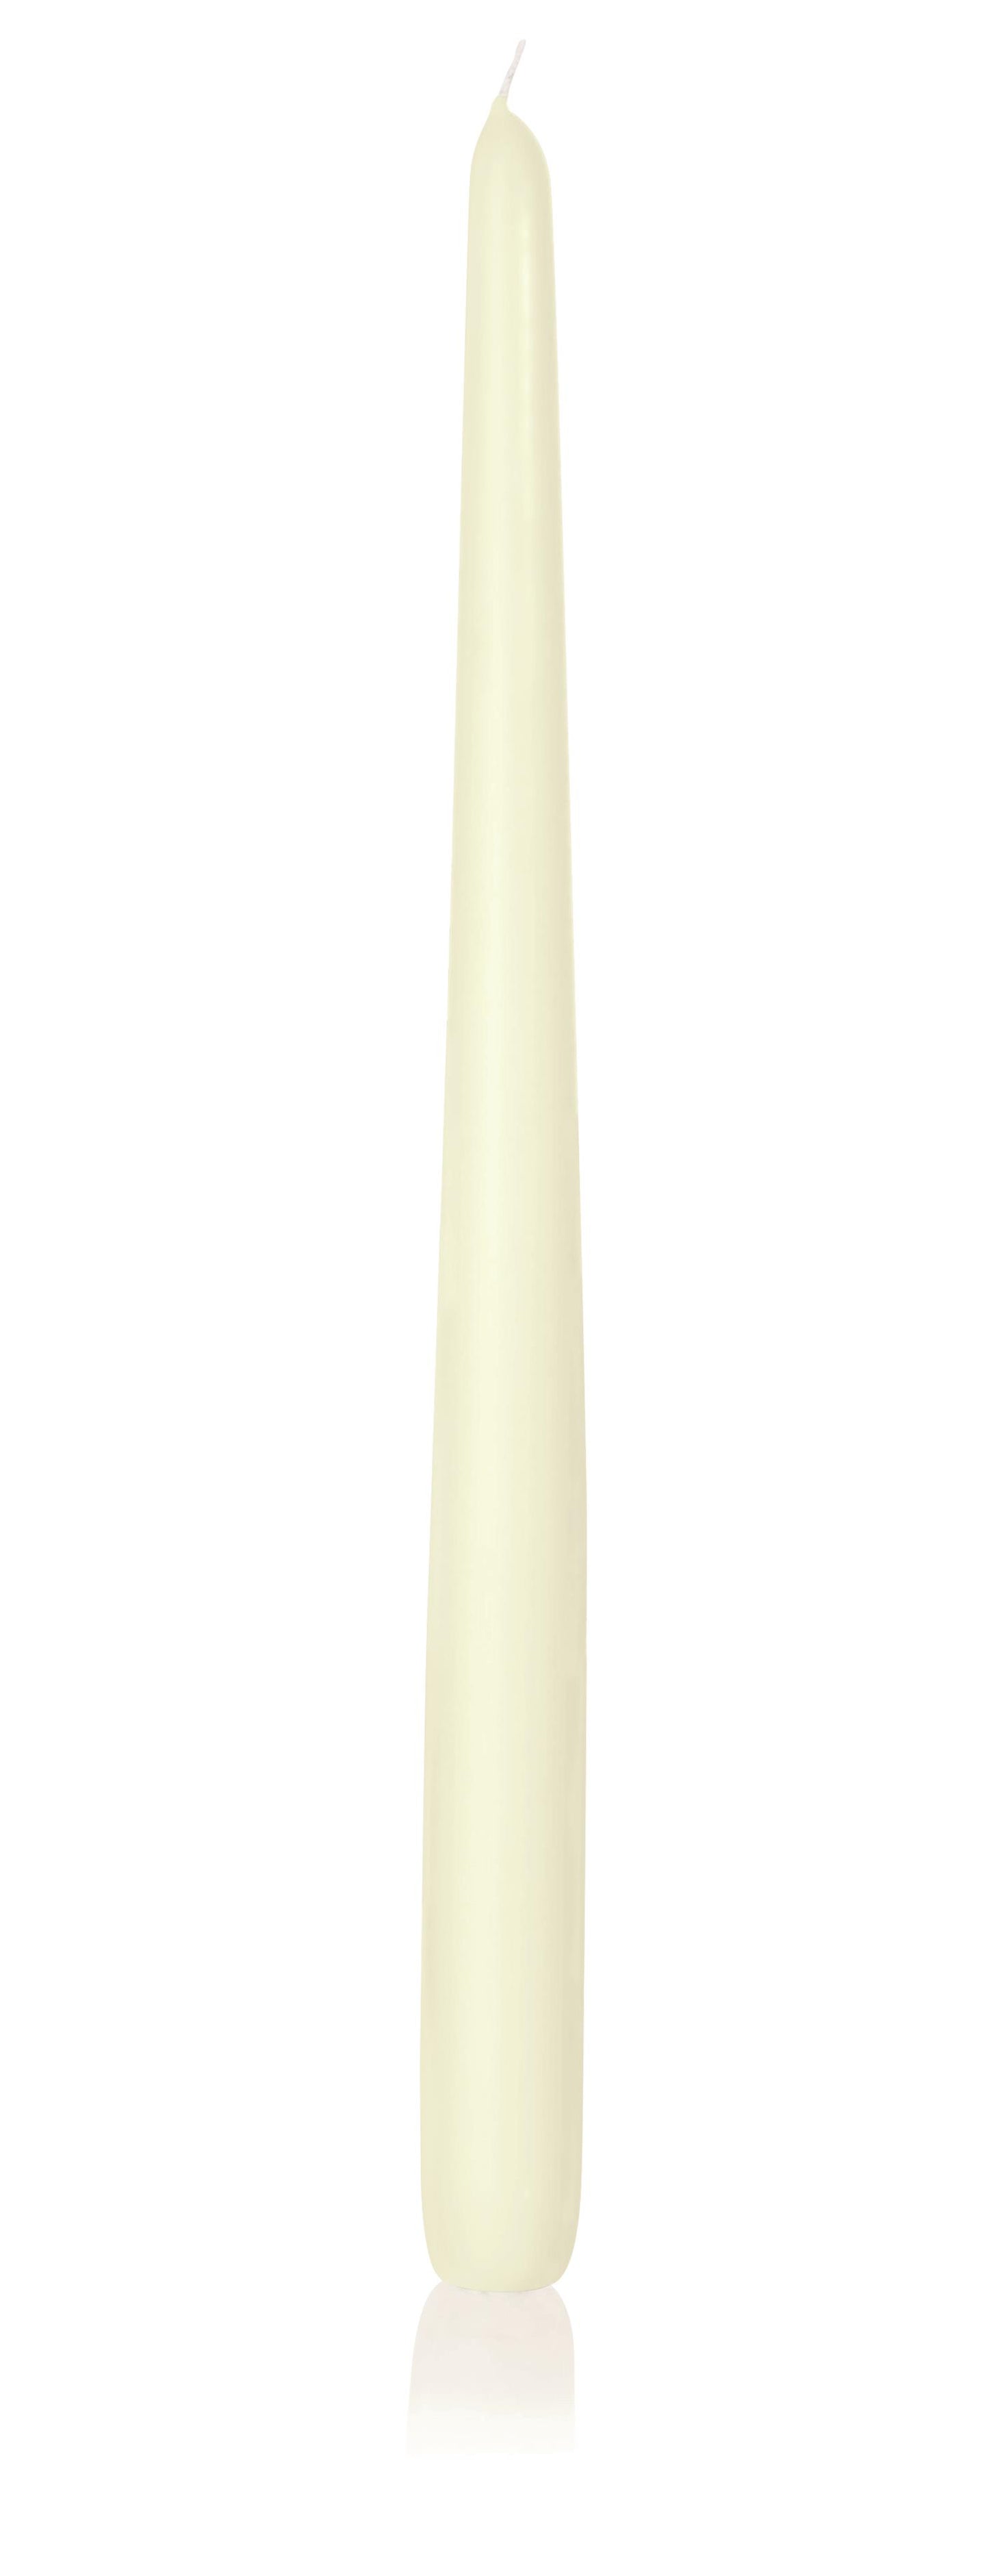 6x Konische Kerzen in Cellophan 400/25mm (Elfenbein)